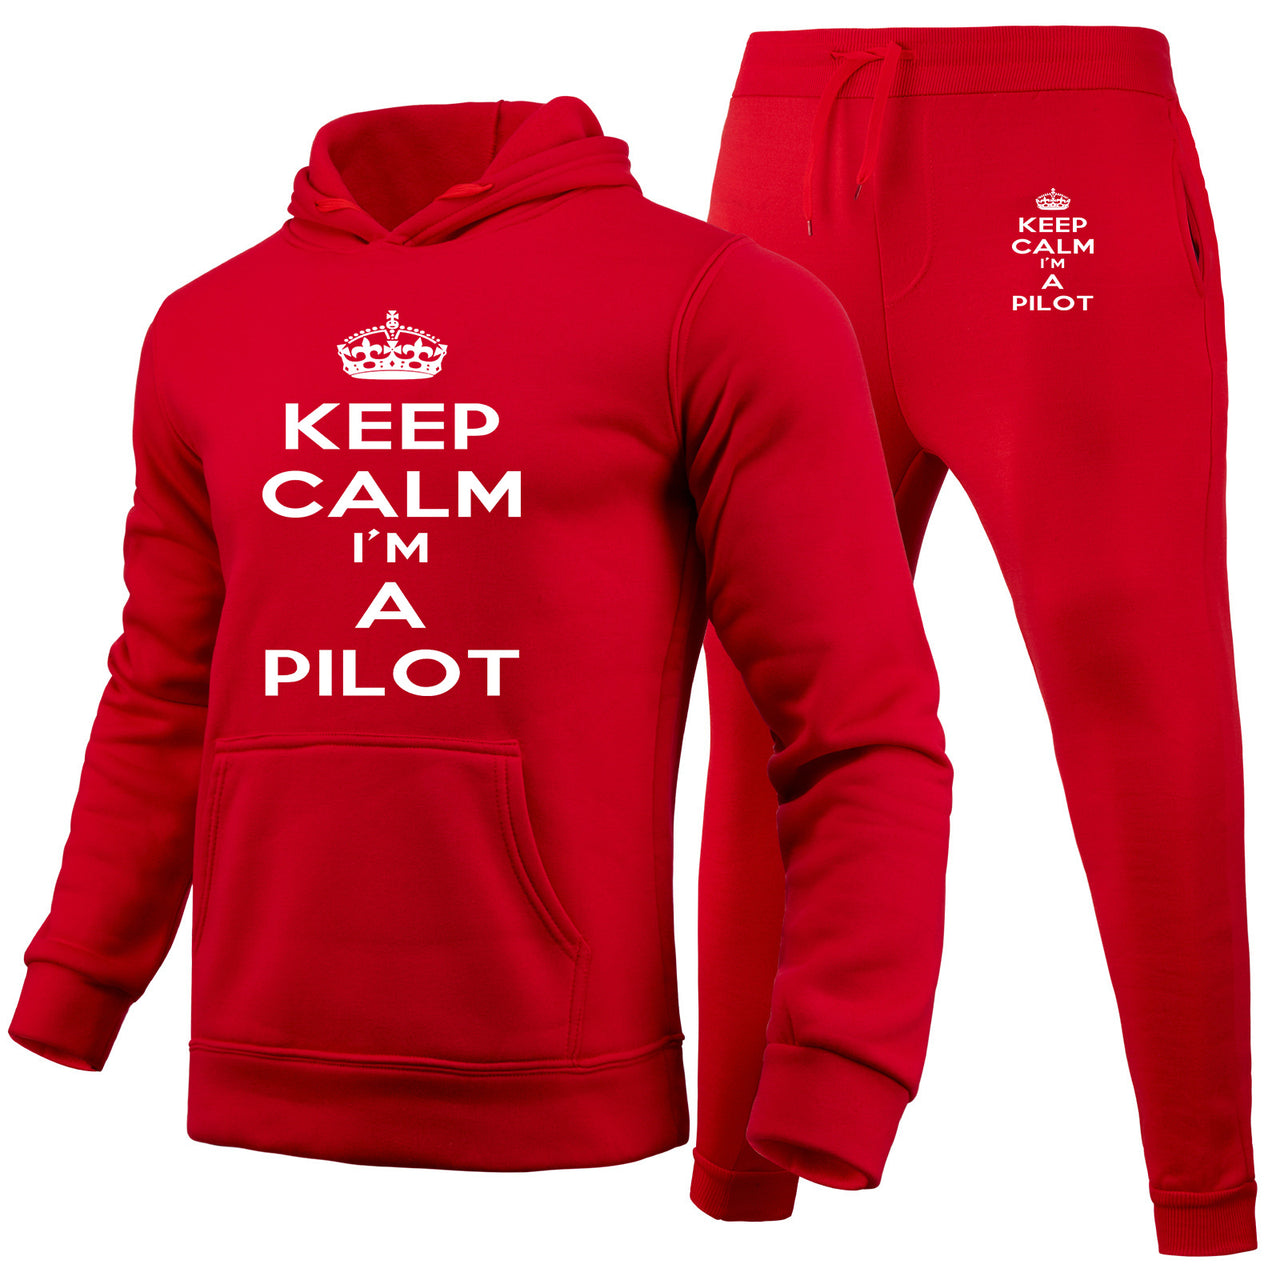 Keep Calm I'm a Pilot Designed Hoodies & Sweatpants Set